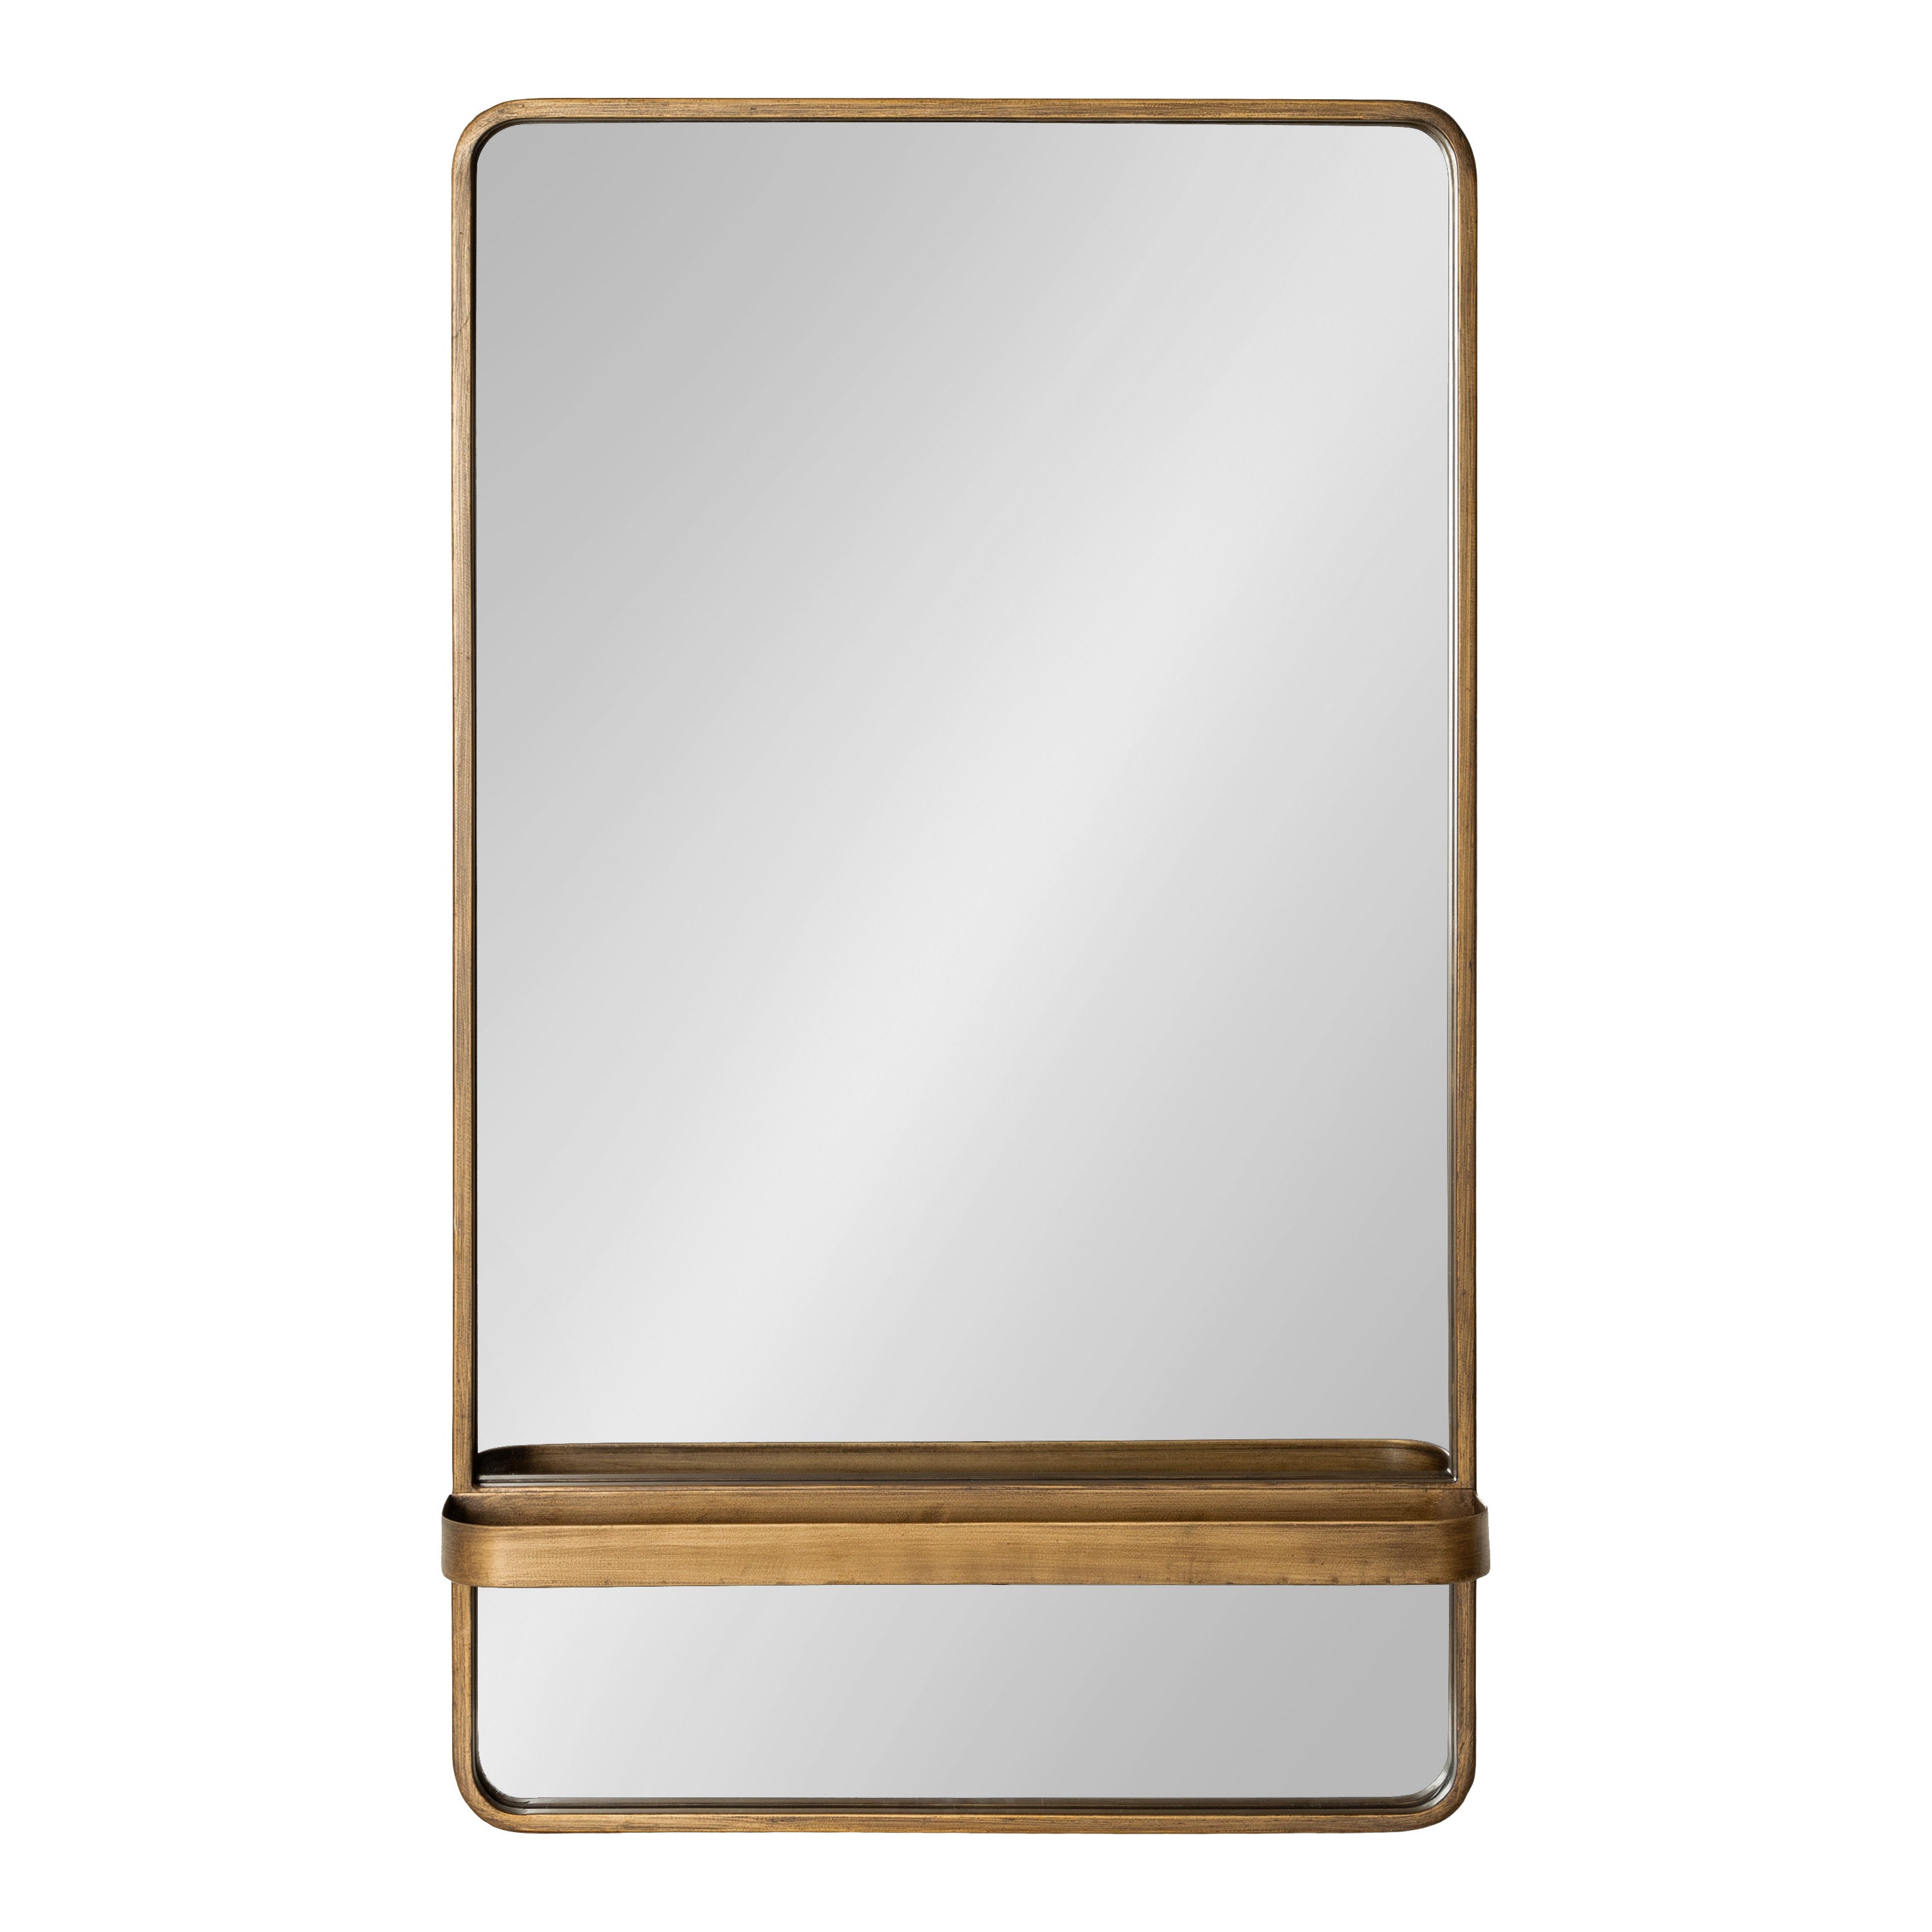 Estero Wall Rectangle Mirror with Shelf